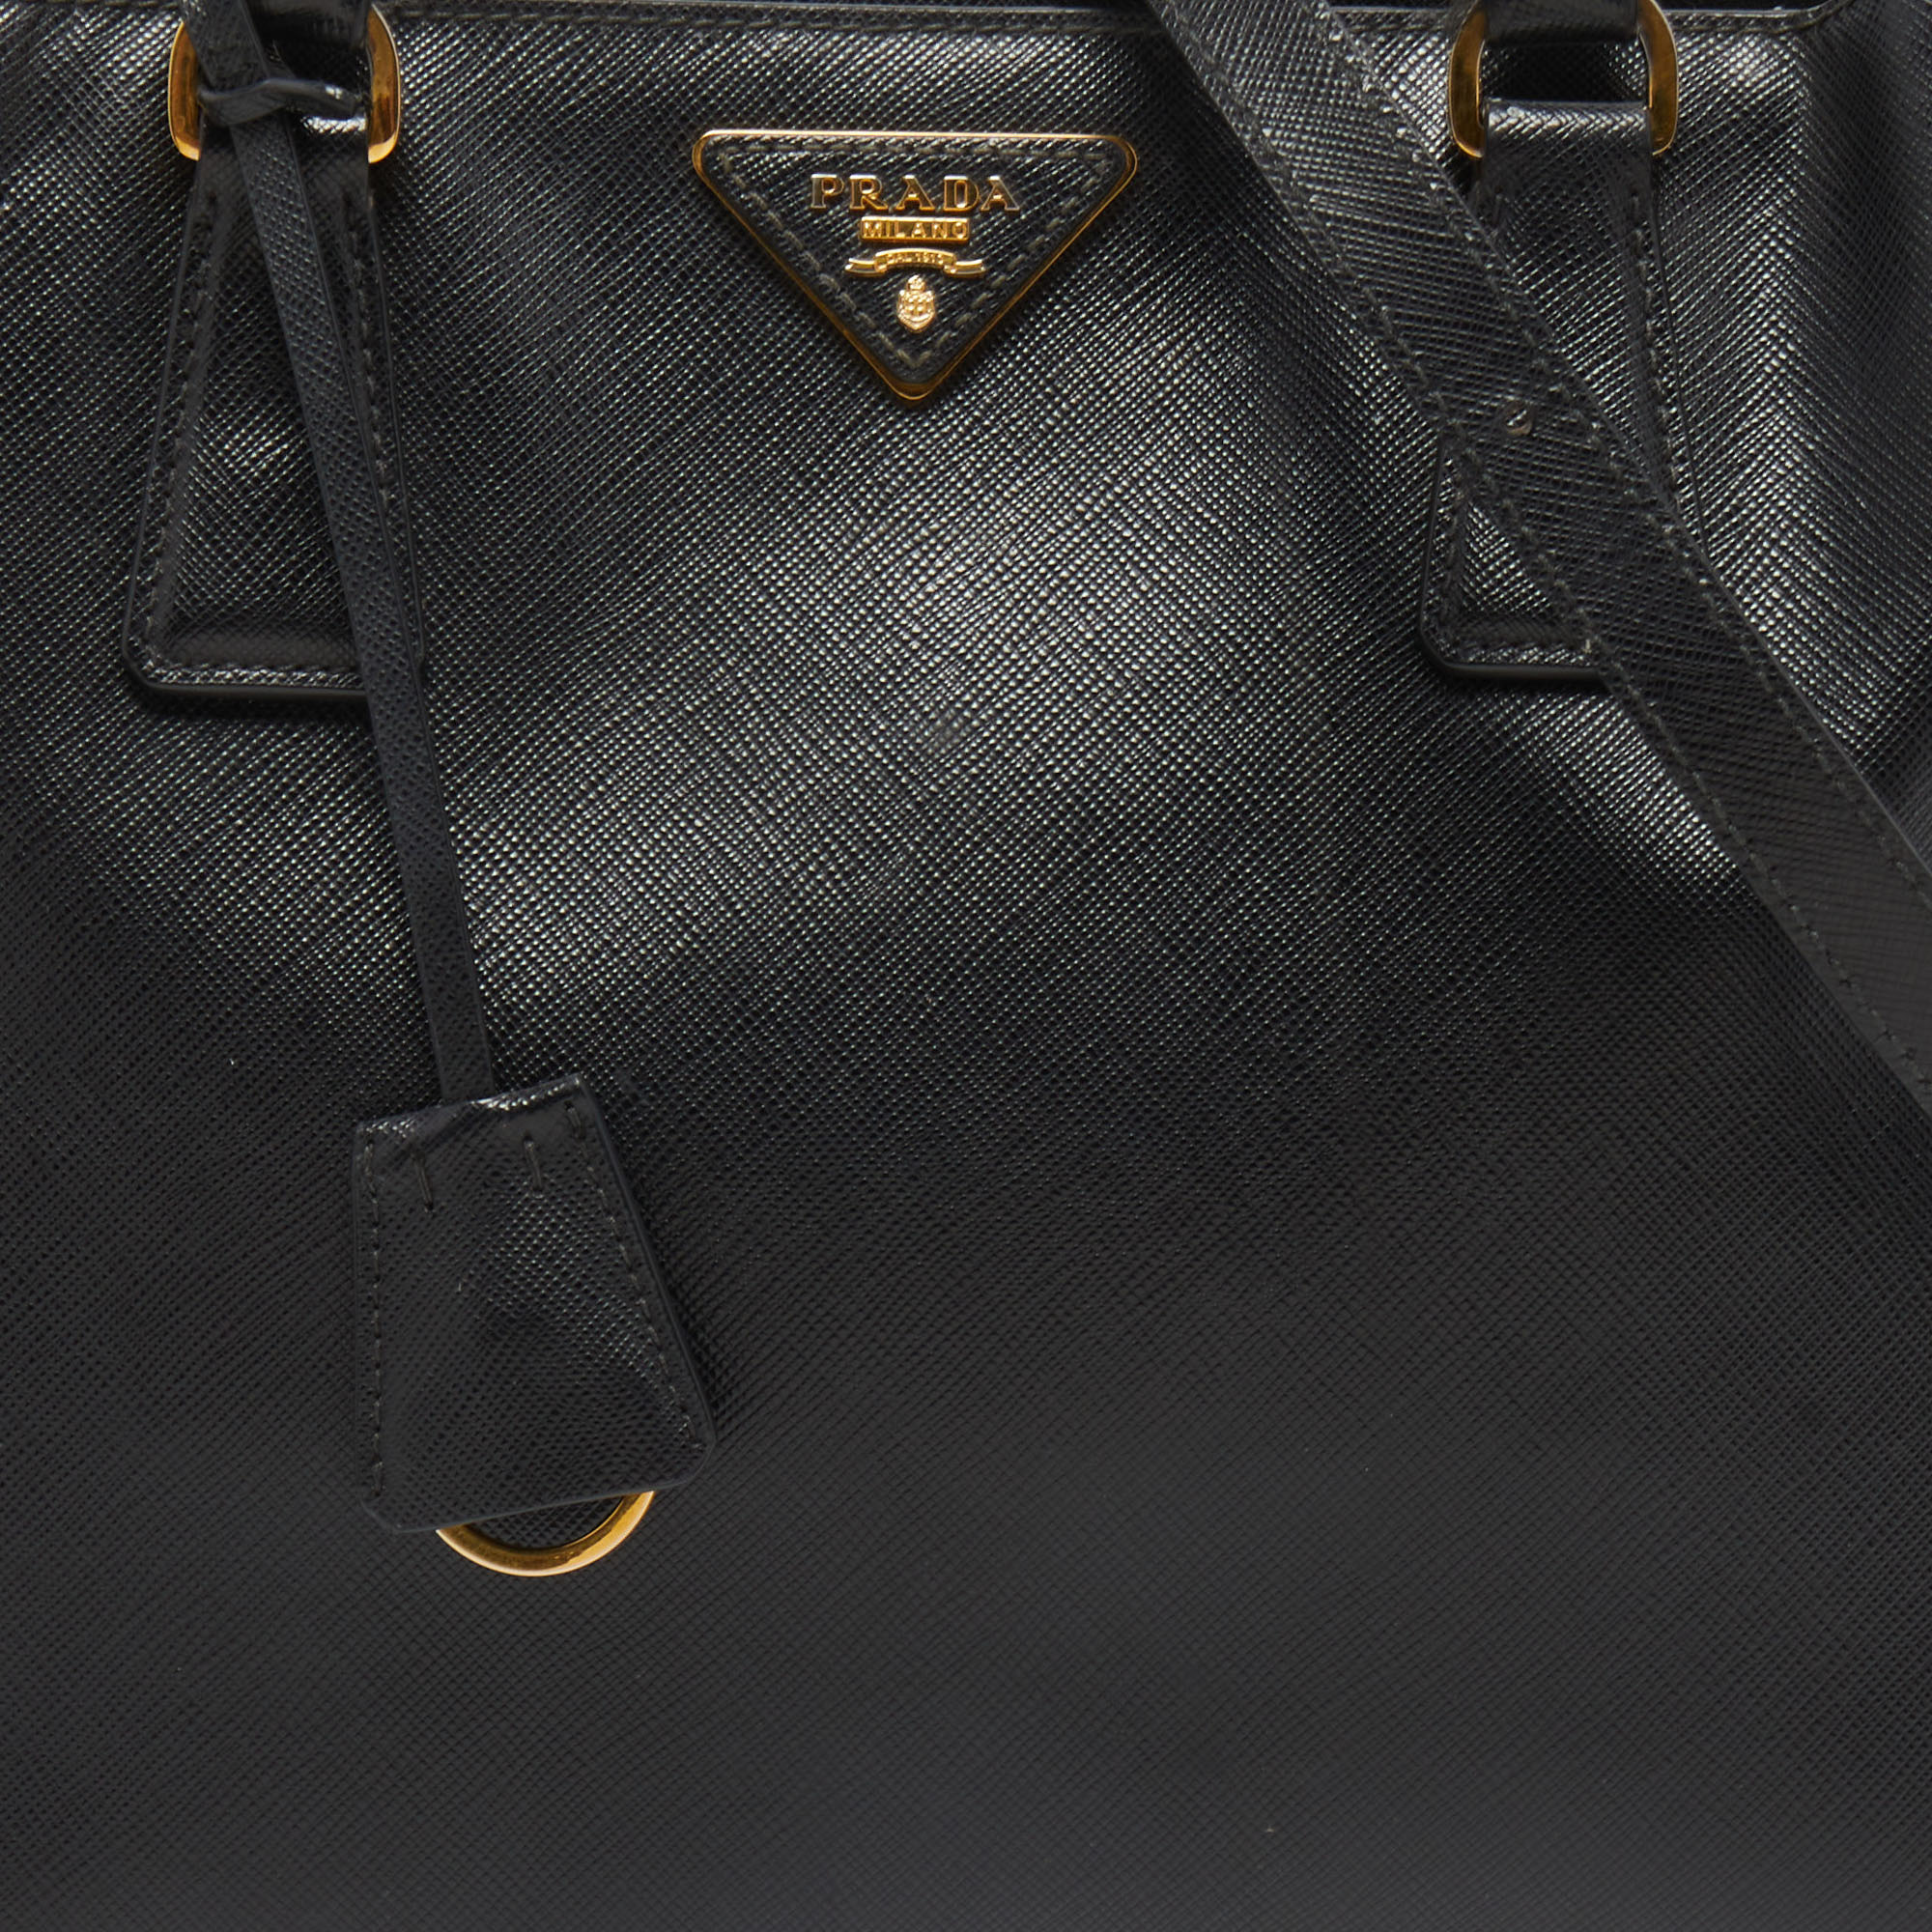 Prada Black Saffiano Leather Zip Galleria Tote